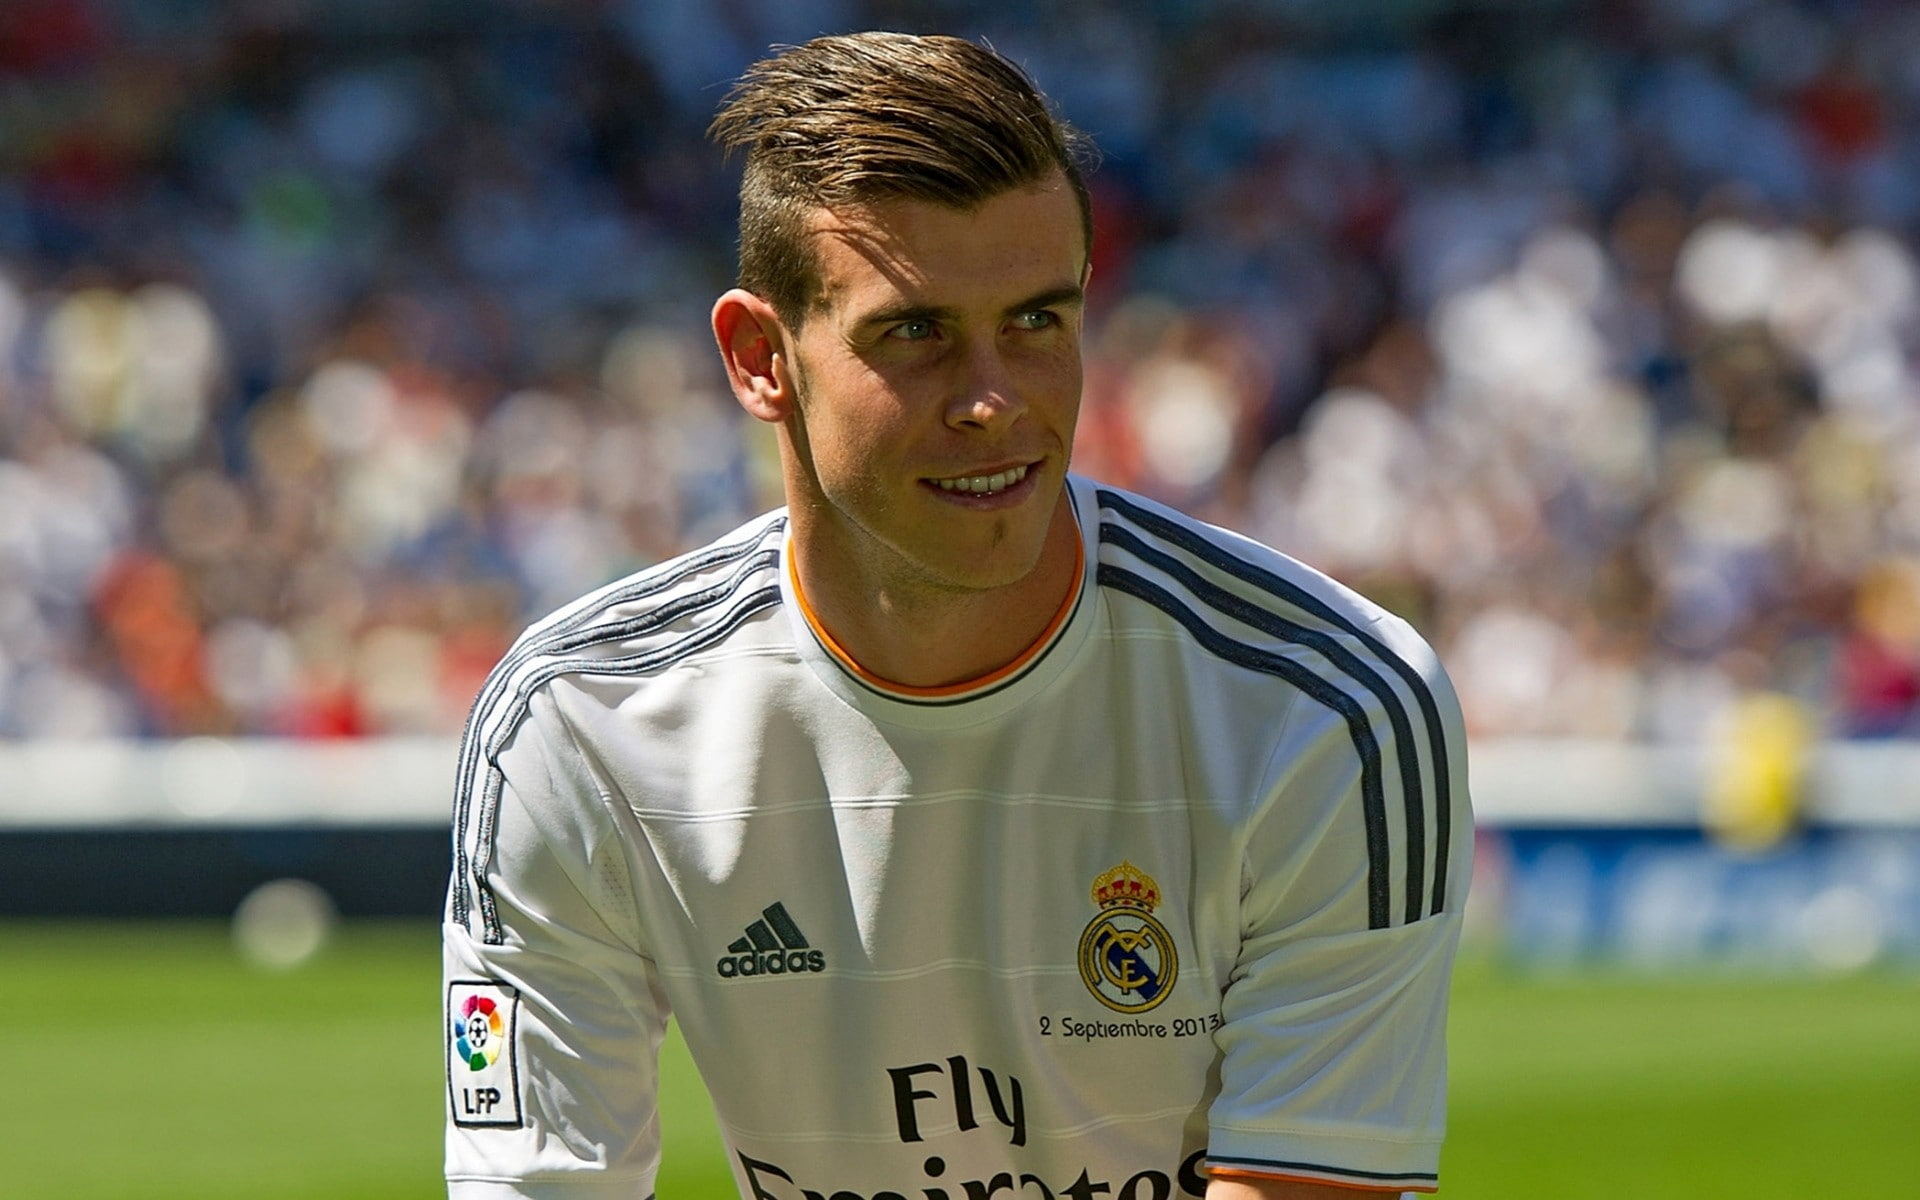 Gareth Bale, Real Madrid, Men, Football Player, men's white and black adids soccer jersey